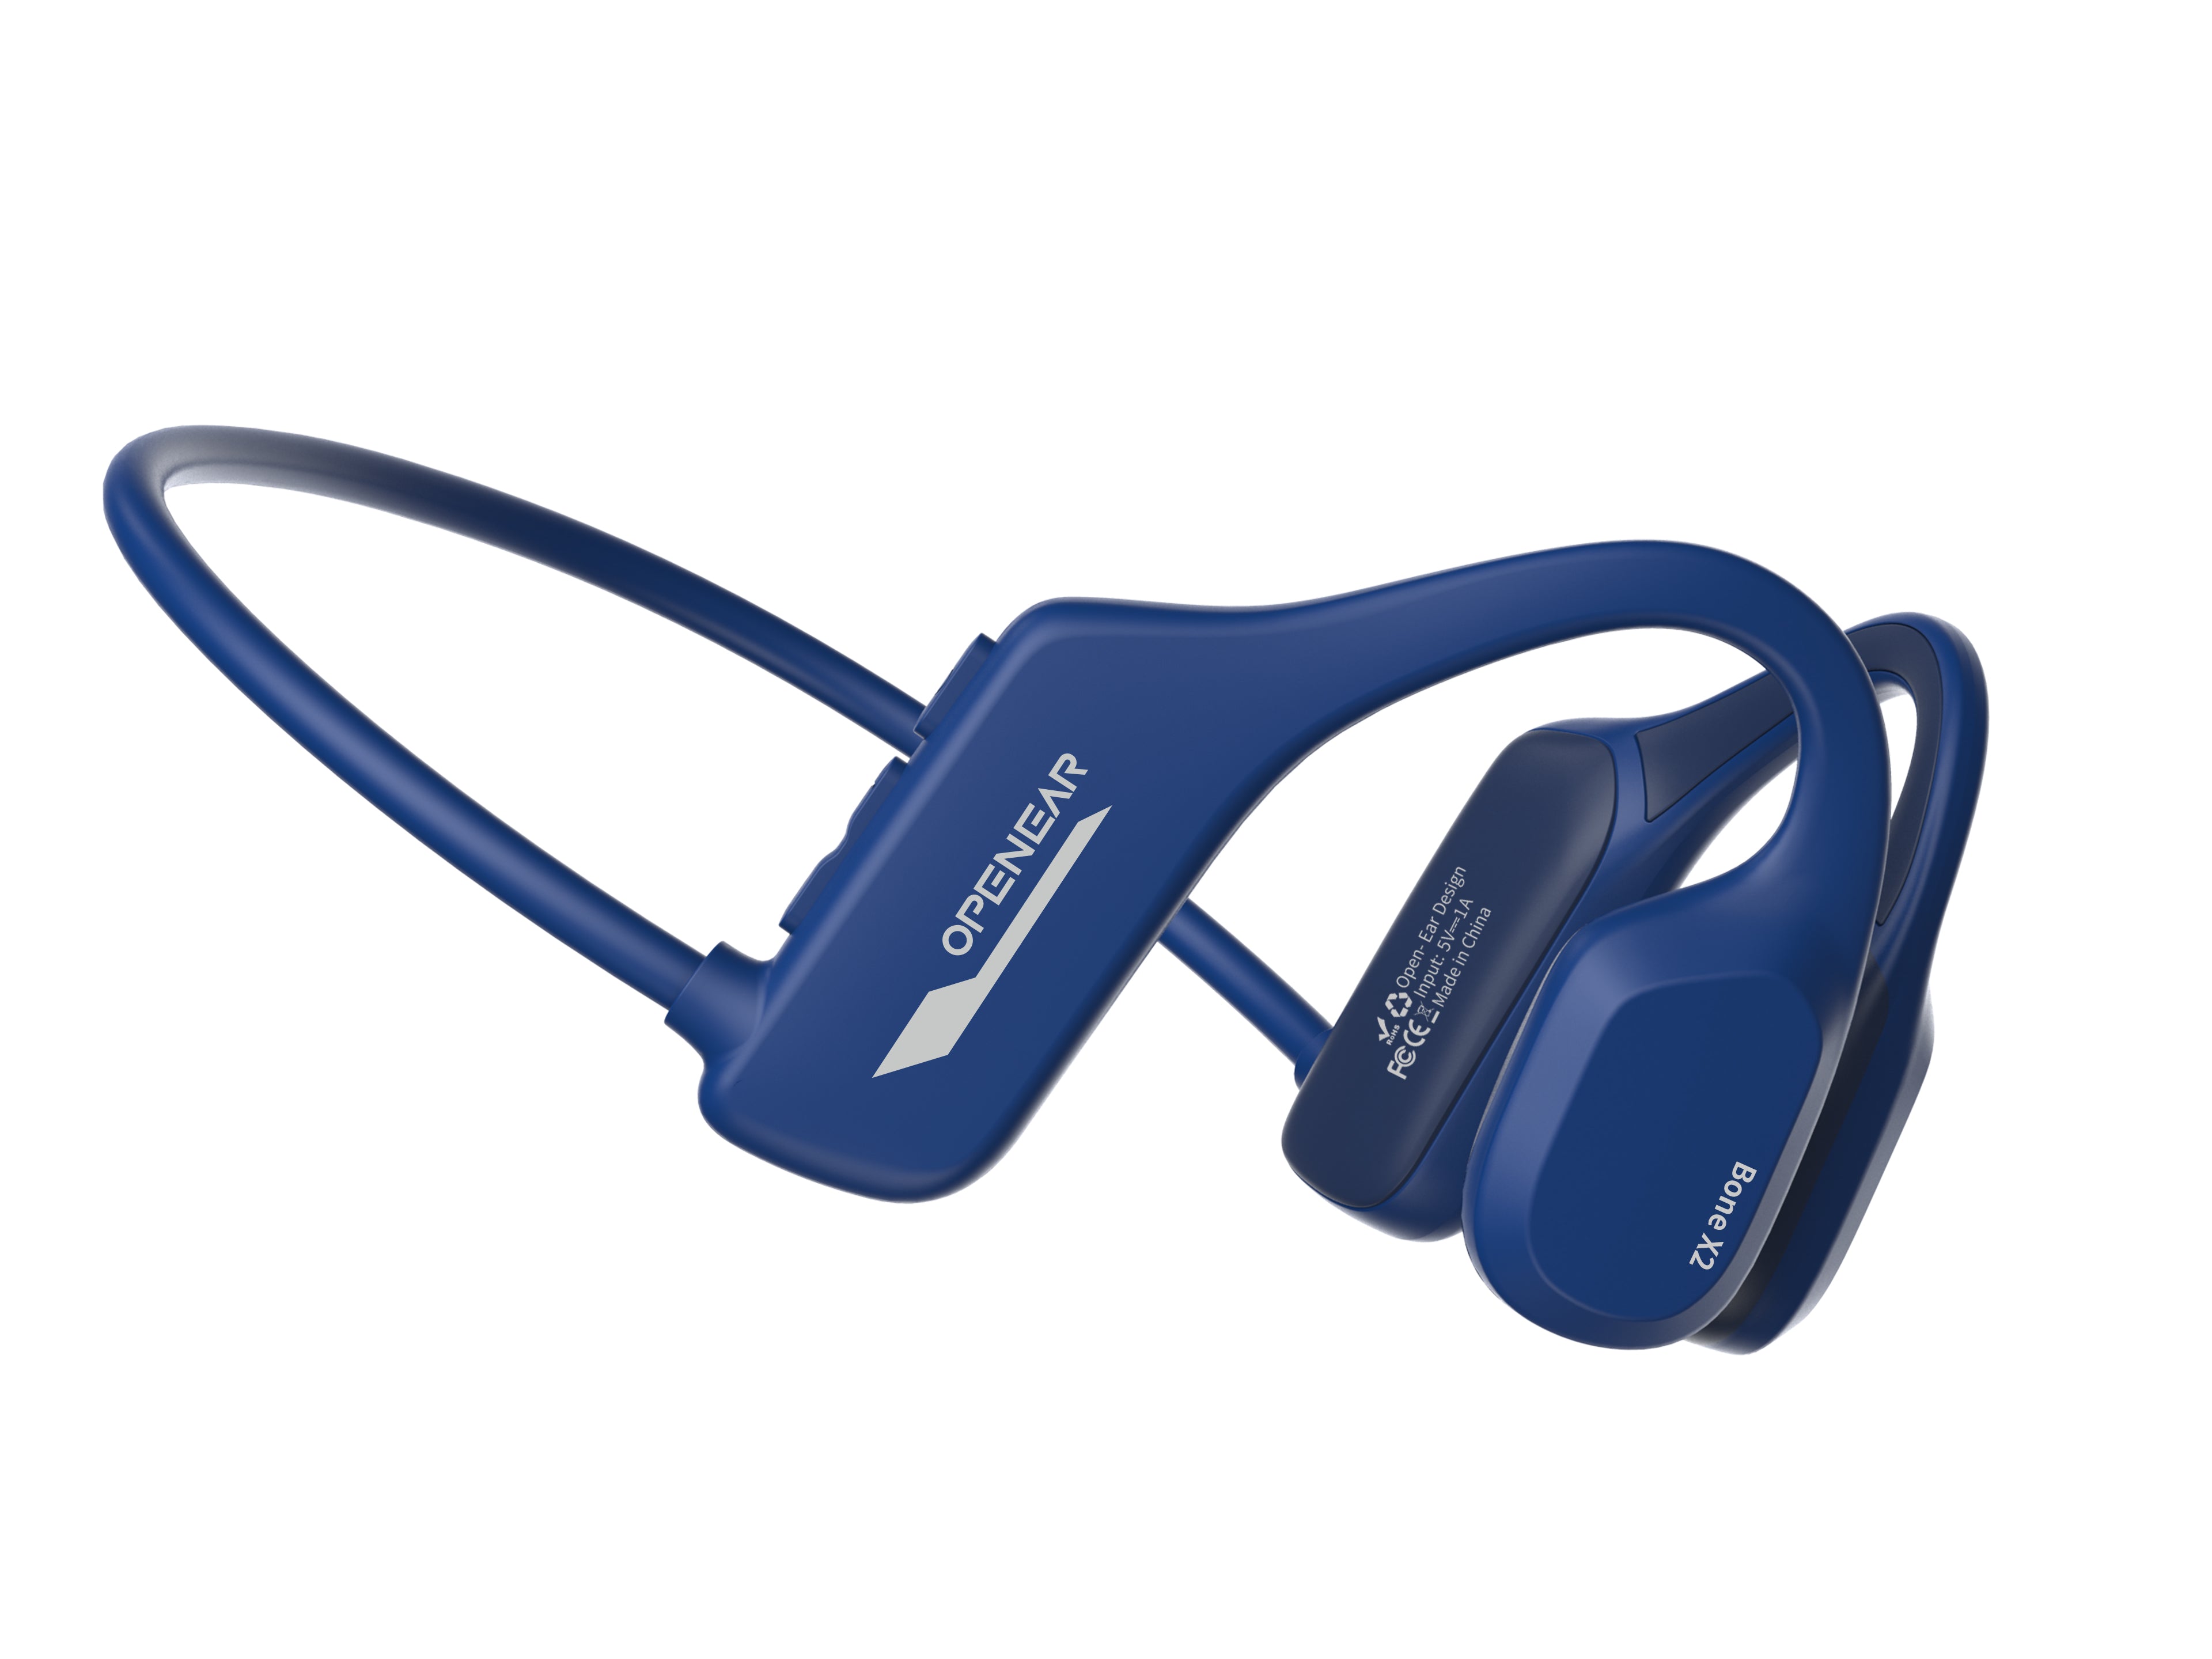 OPENEAR Bone X2 Swimming headphones